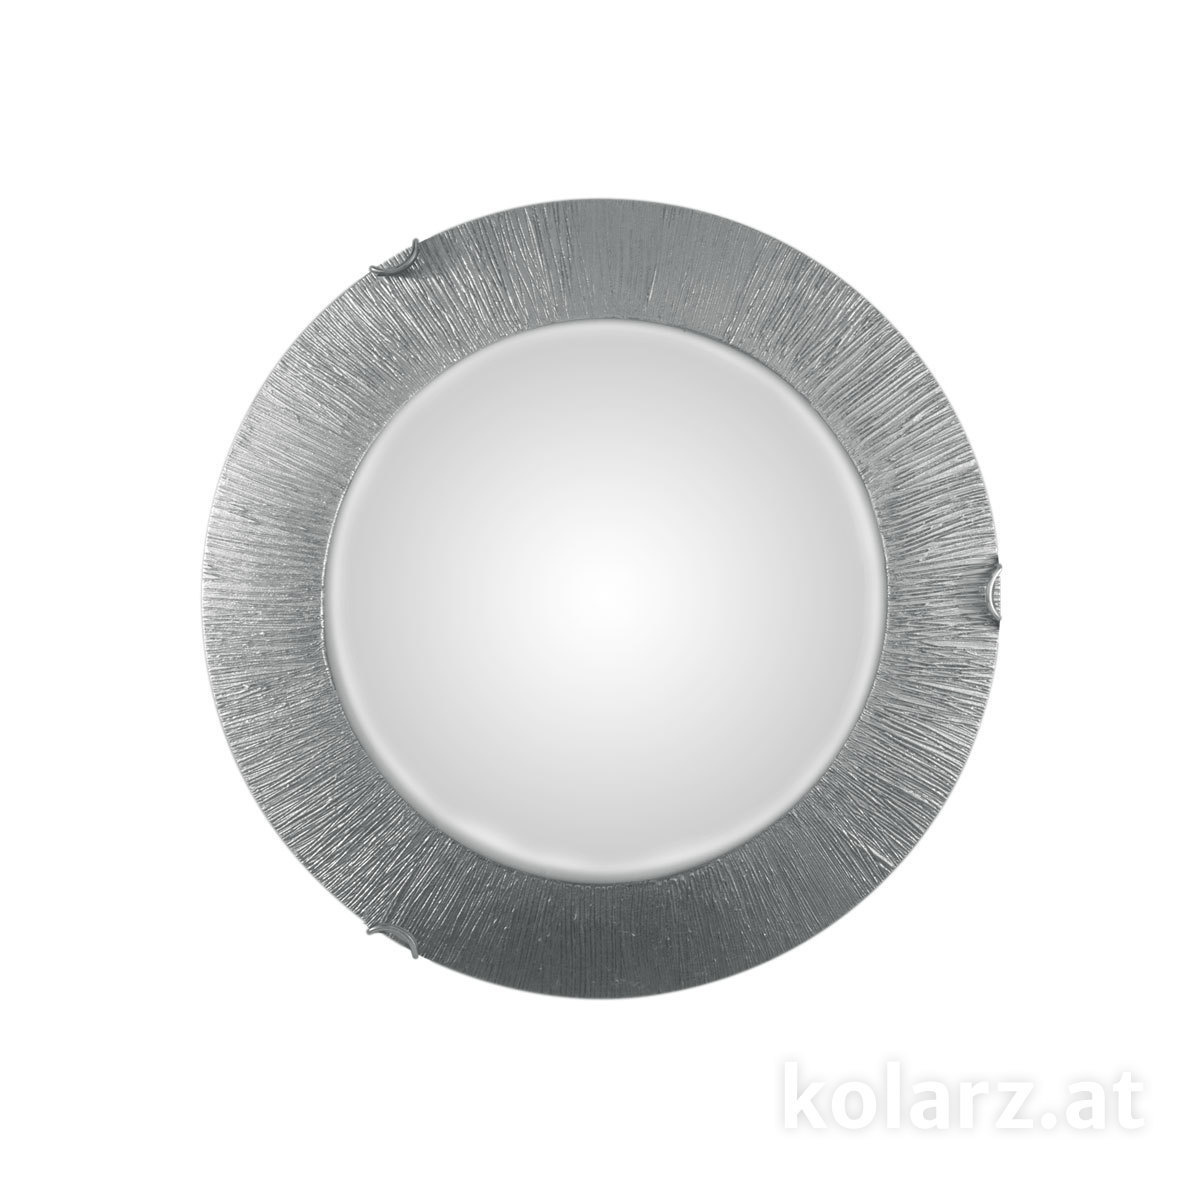 KOLARZ Leuchten Sonderangebote - Sale bei Deckenleuchten & Deckenlampen von KOLARZ Leuchten LED-Deckenleuchte MOON 40 cm A1306.12LED.5.SunAg